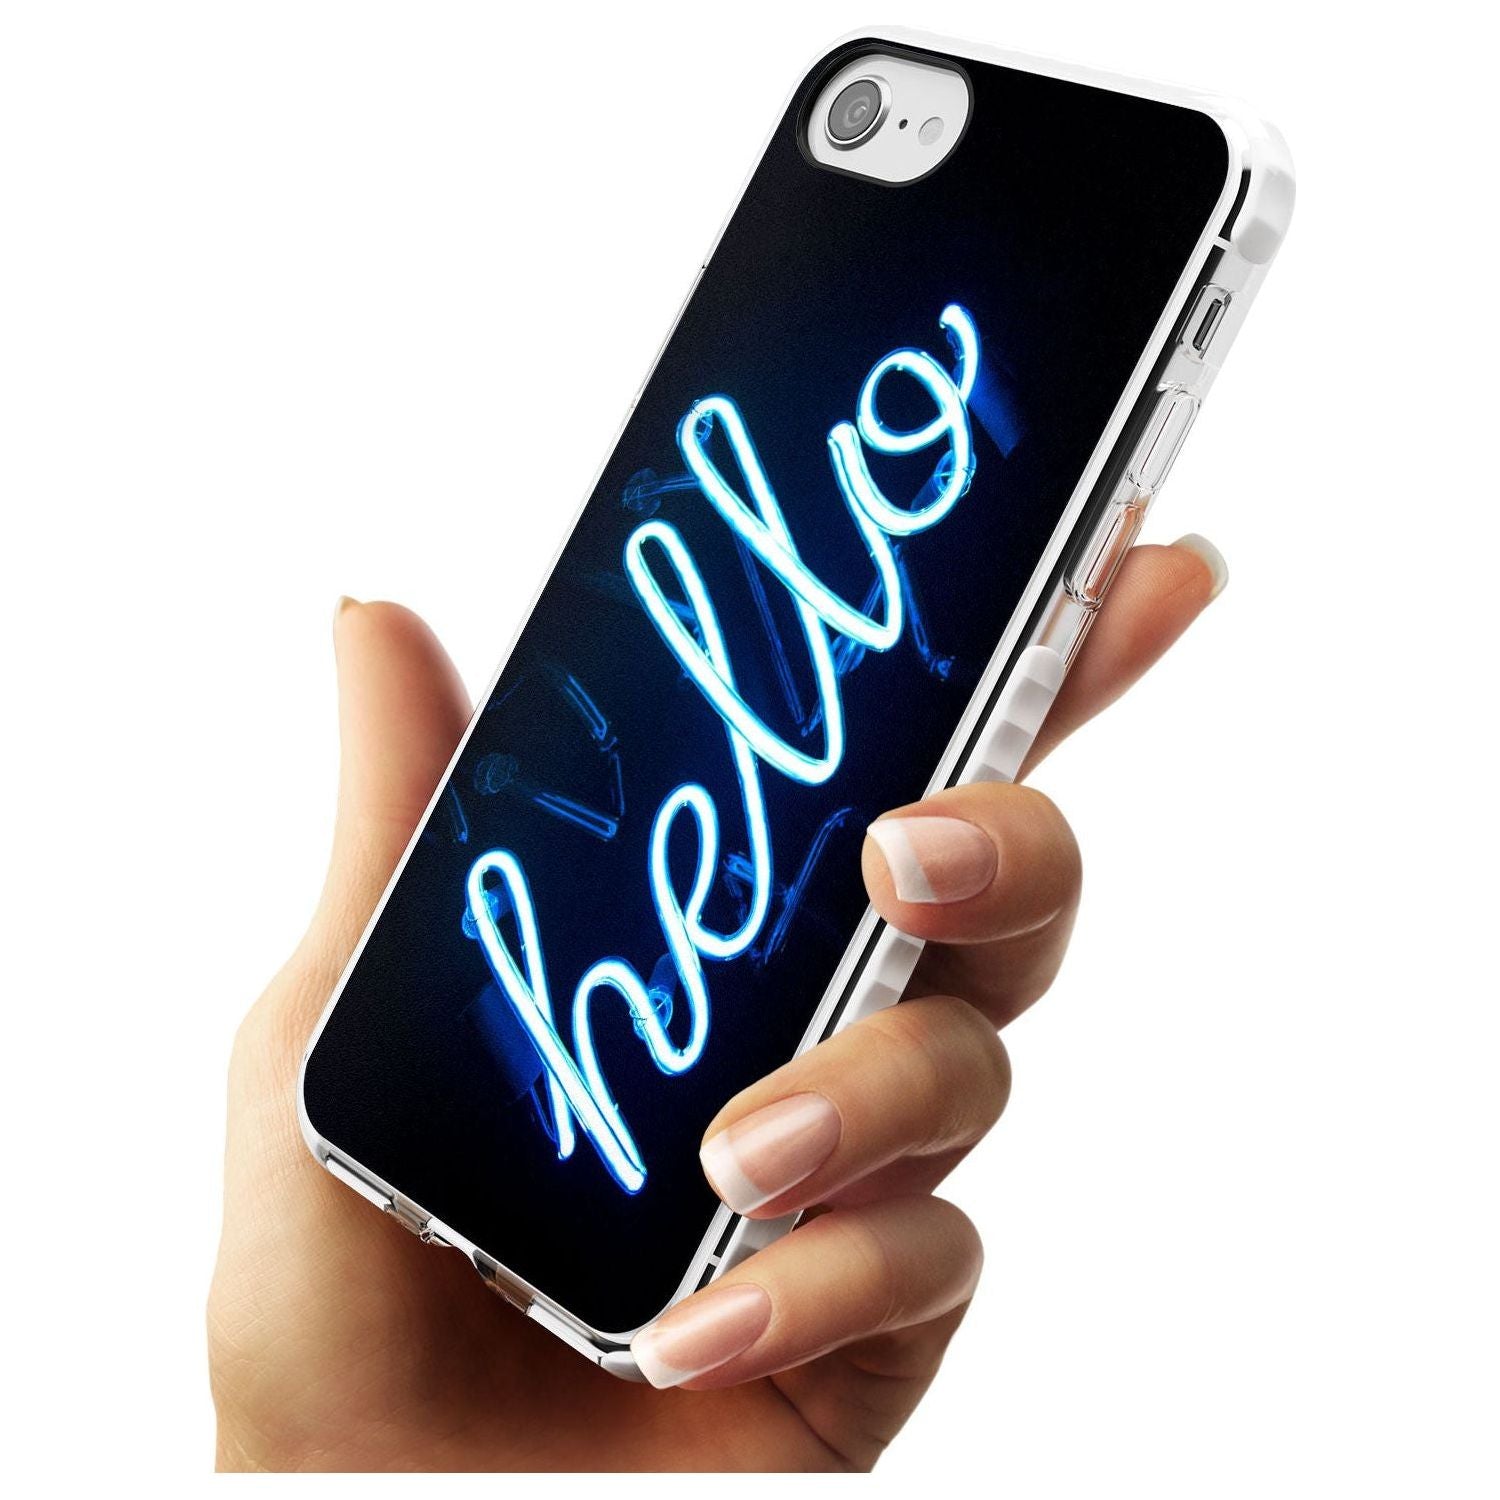 "Hello" Blue Cursive Neon Sign Impact Phone Case for iPhone SE 8 7 Plus